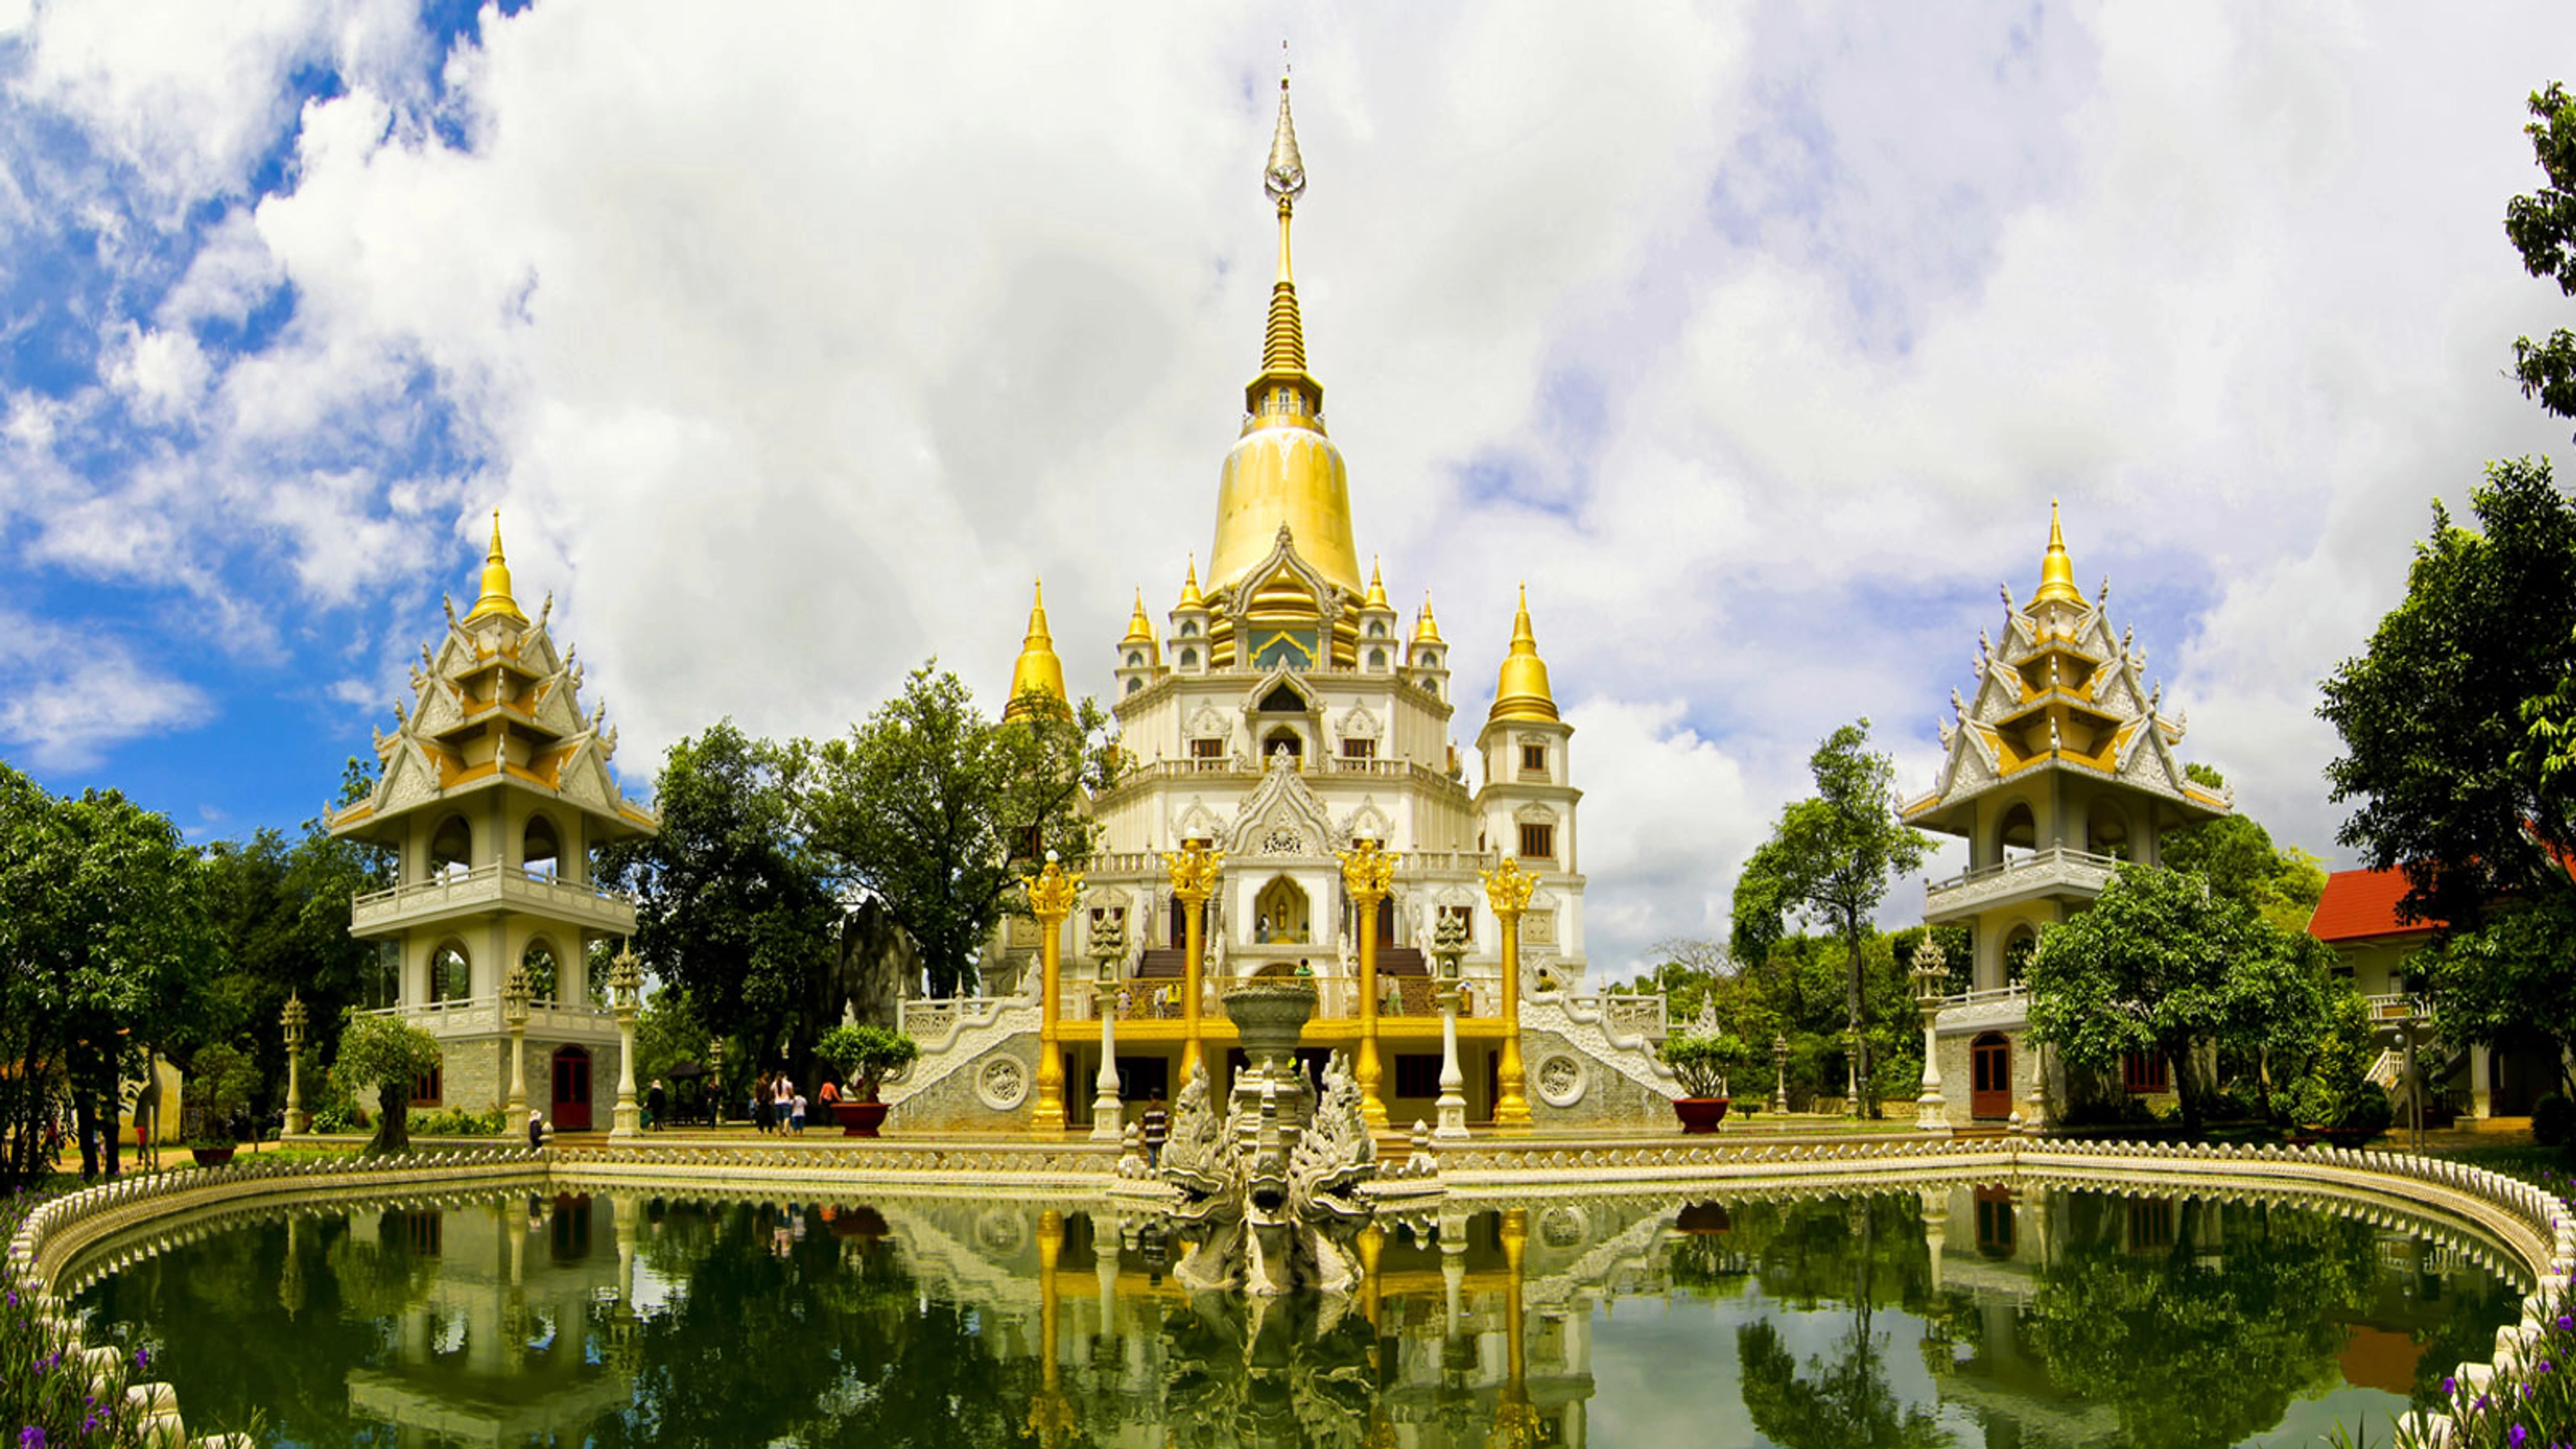 Buu Long Pagoda - A Thai-Styled Temple in the Heart of Saigon